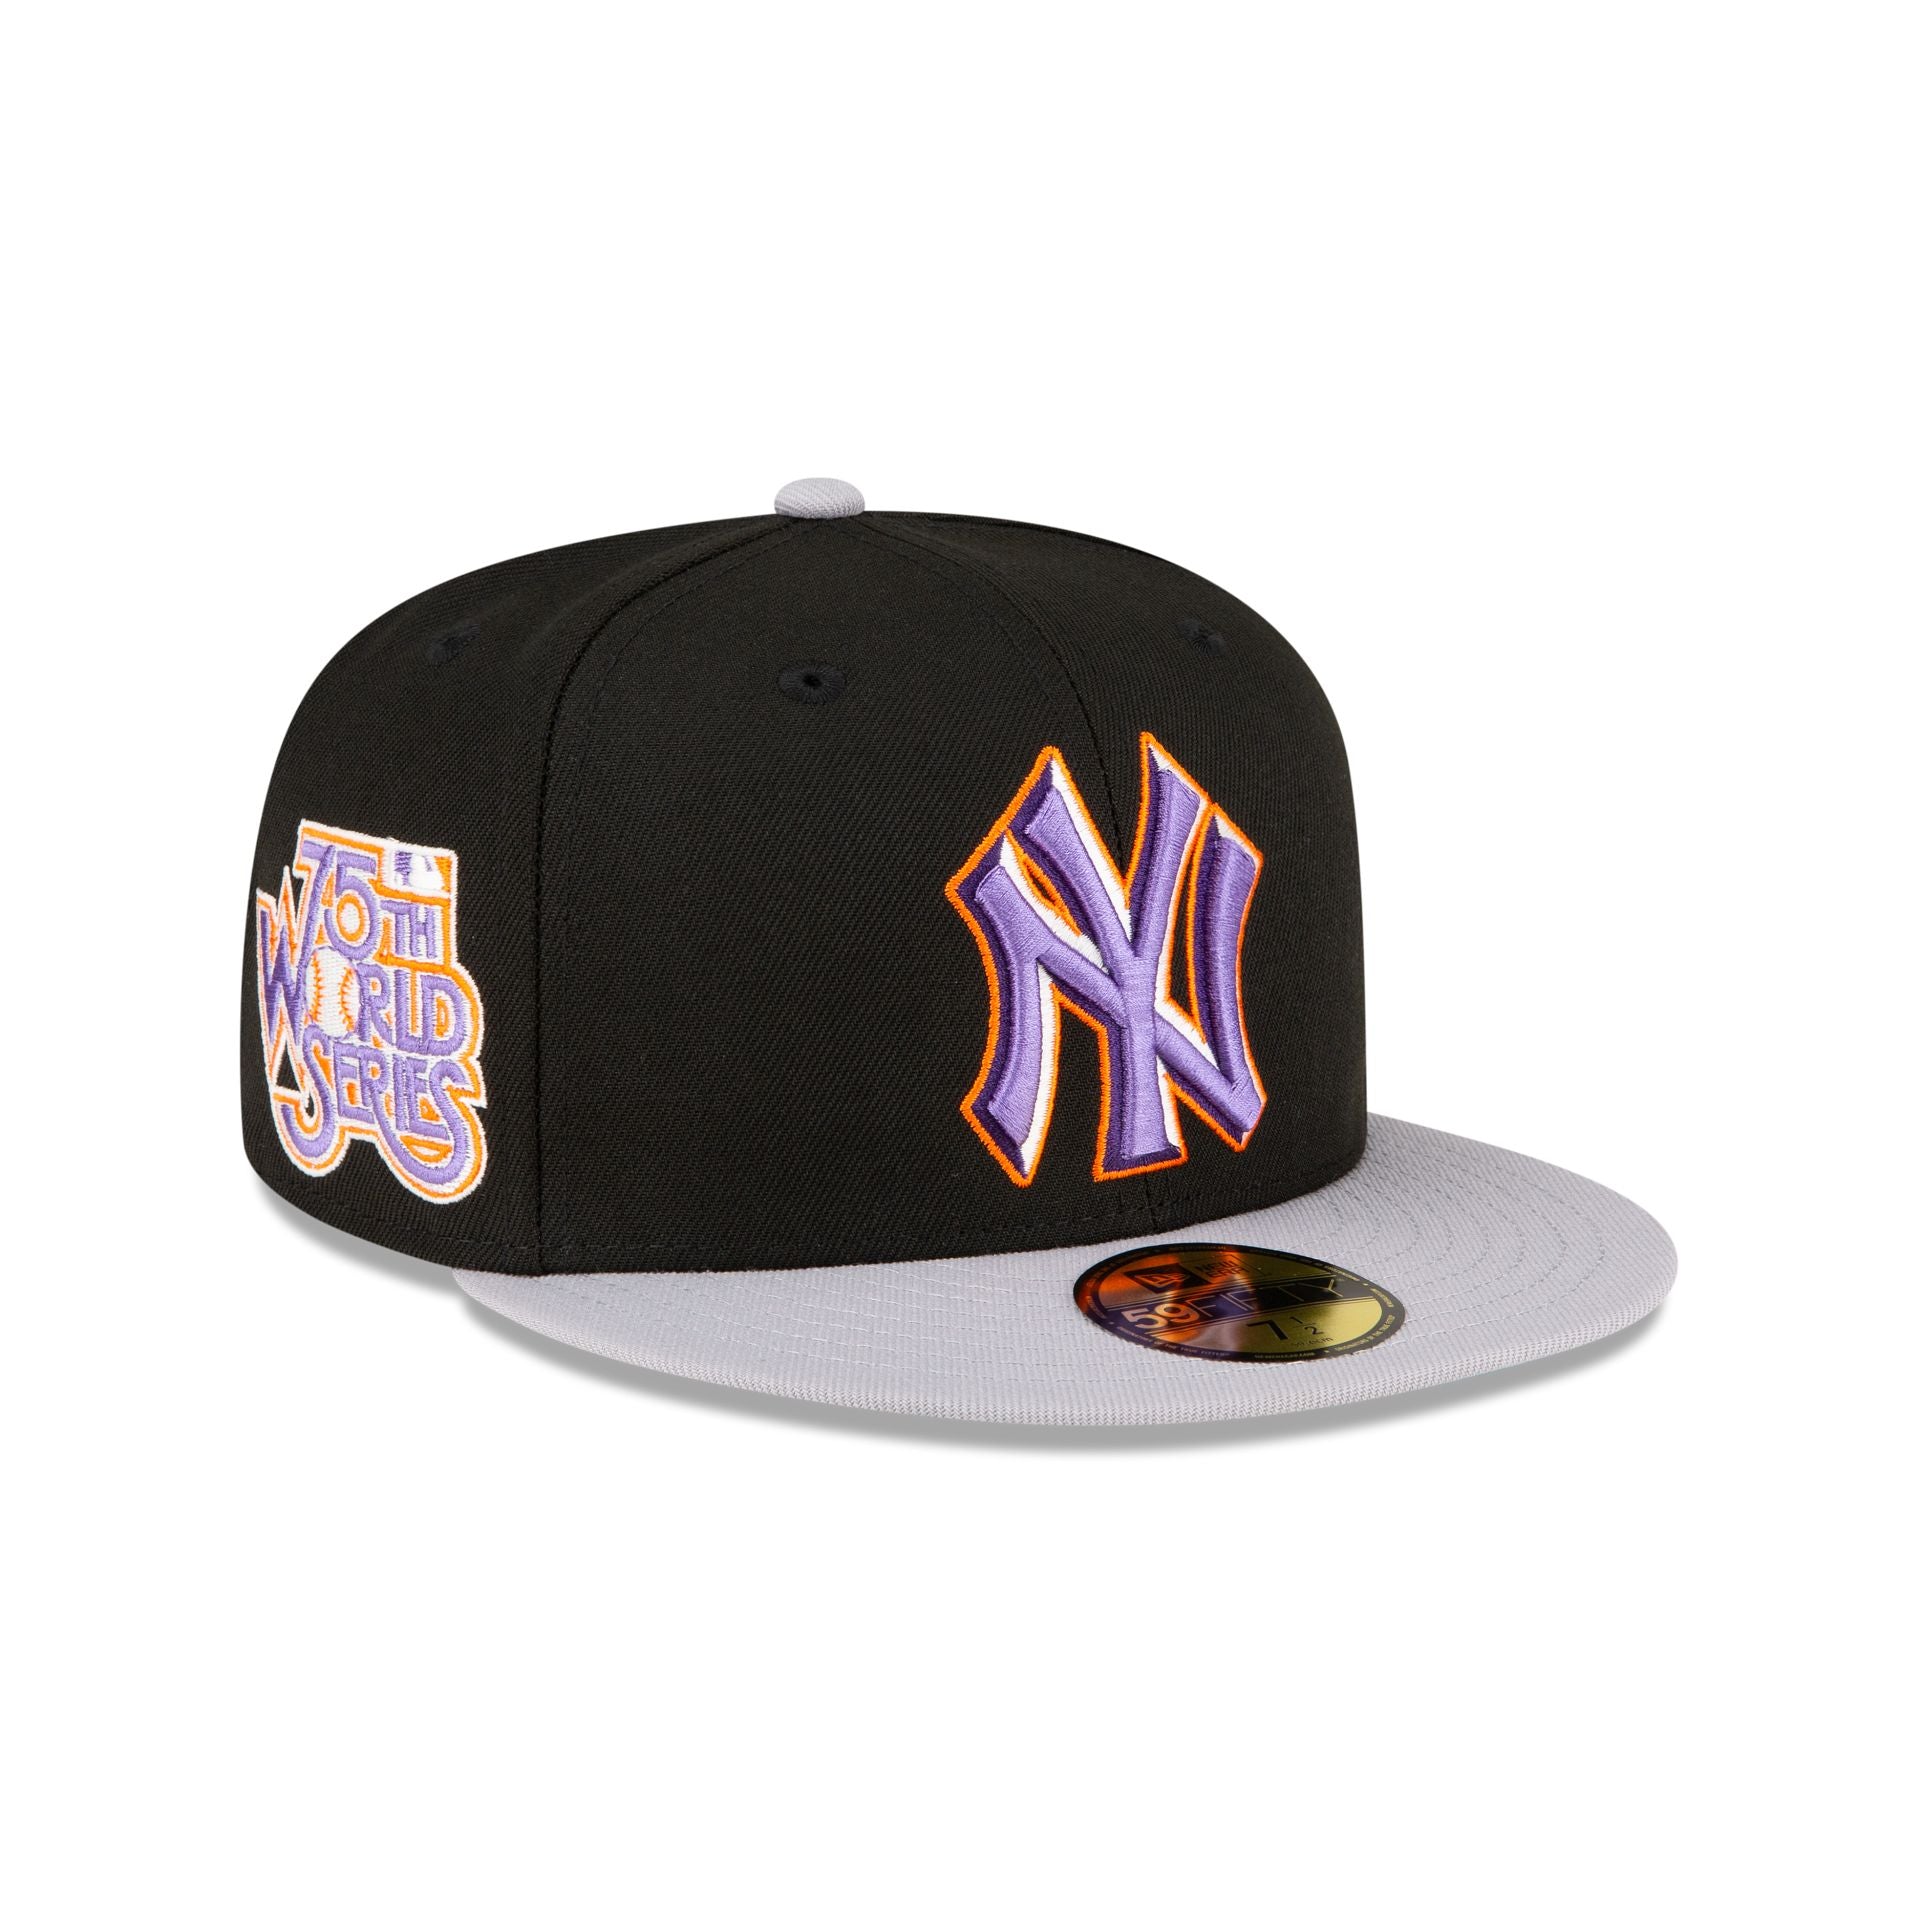 New York Yankees & Caps Era – New Cap Hats